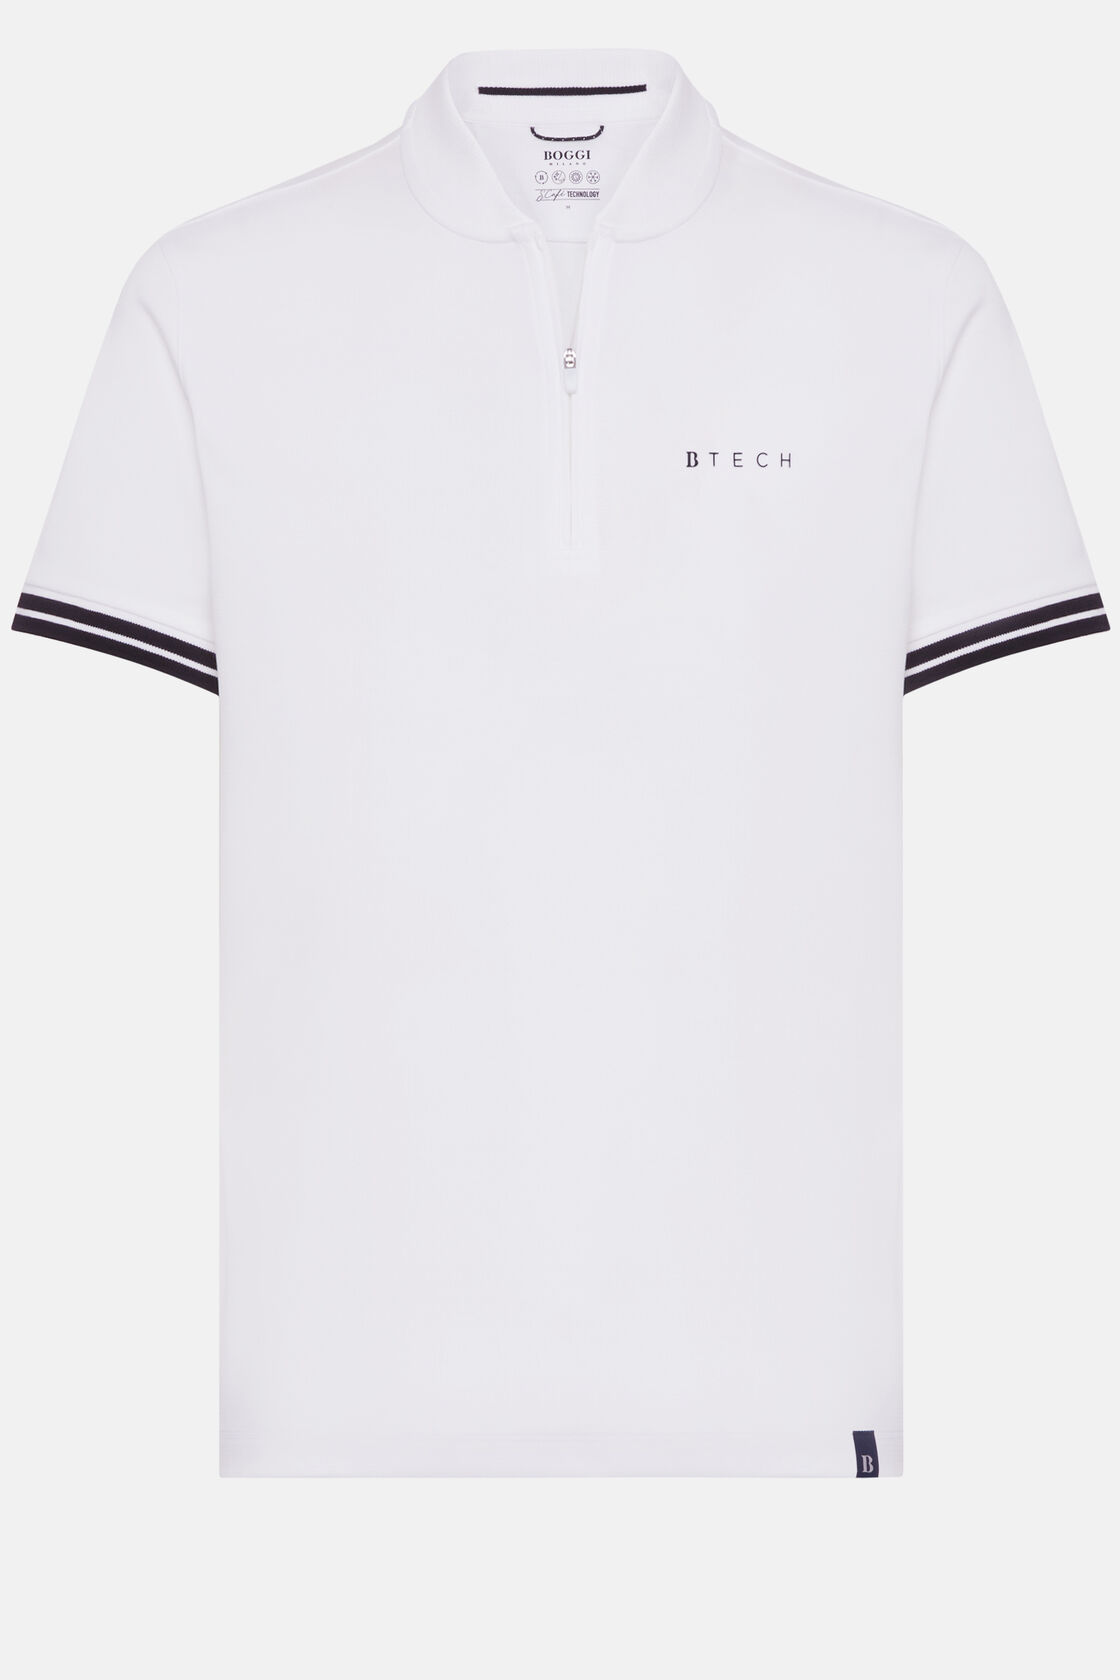 High-Performance Fabric Polo Shirt, White, hi-res